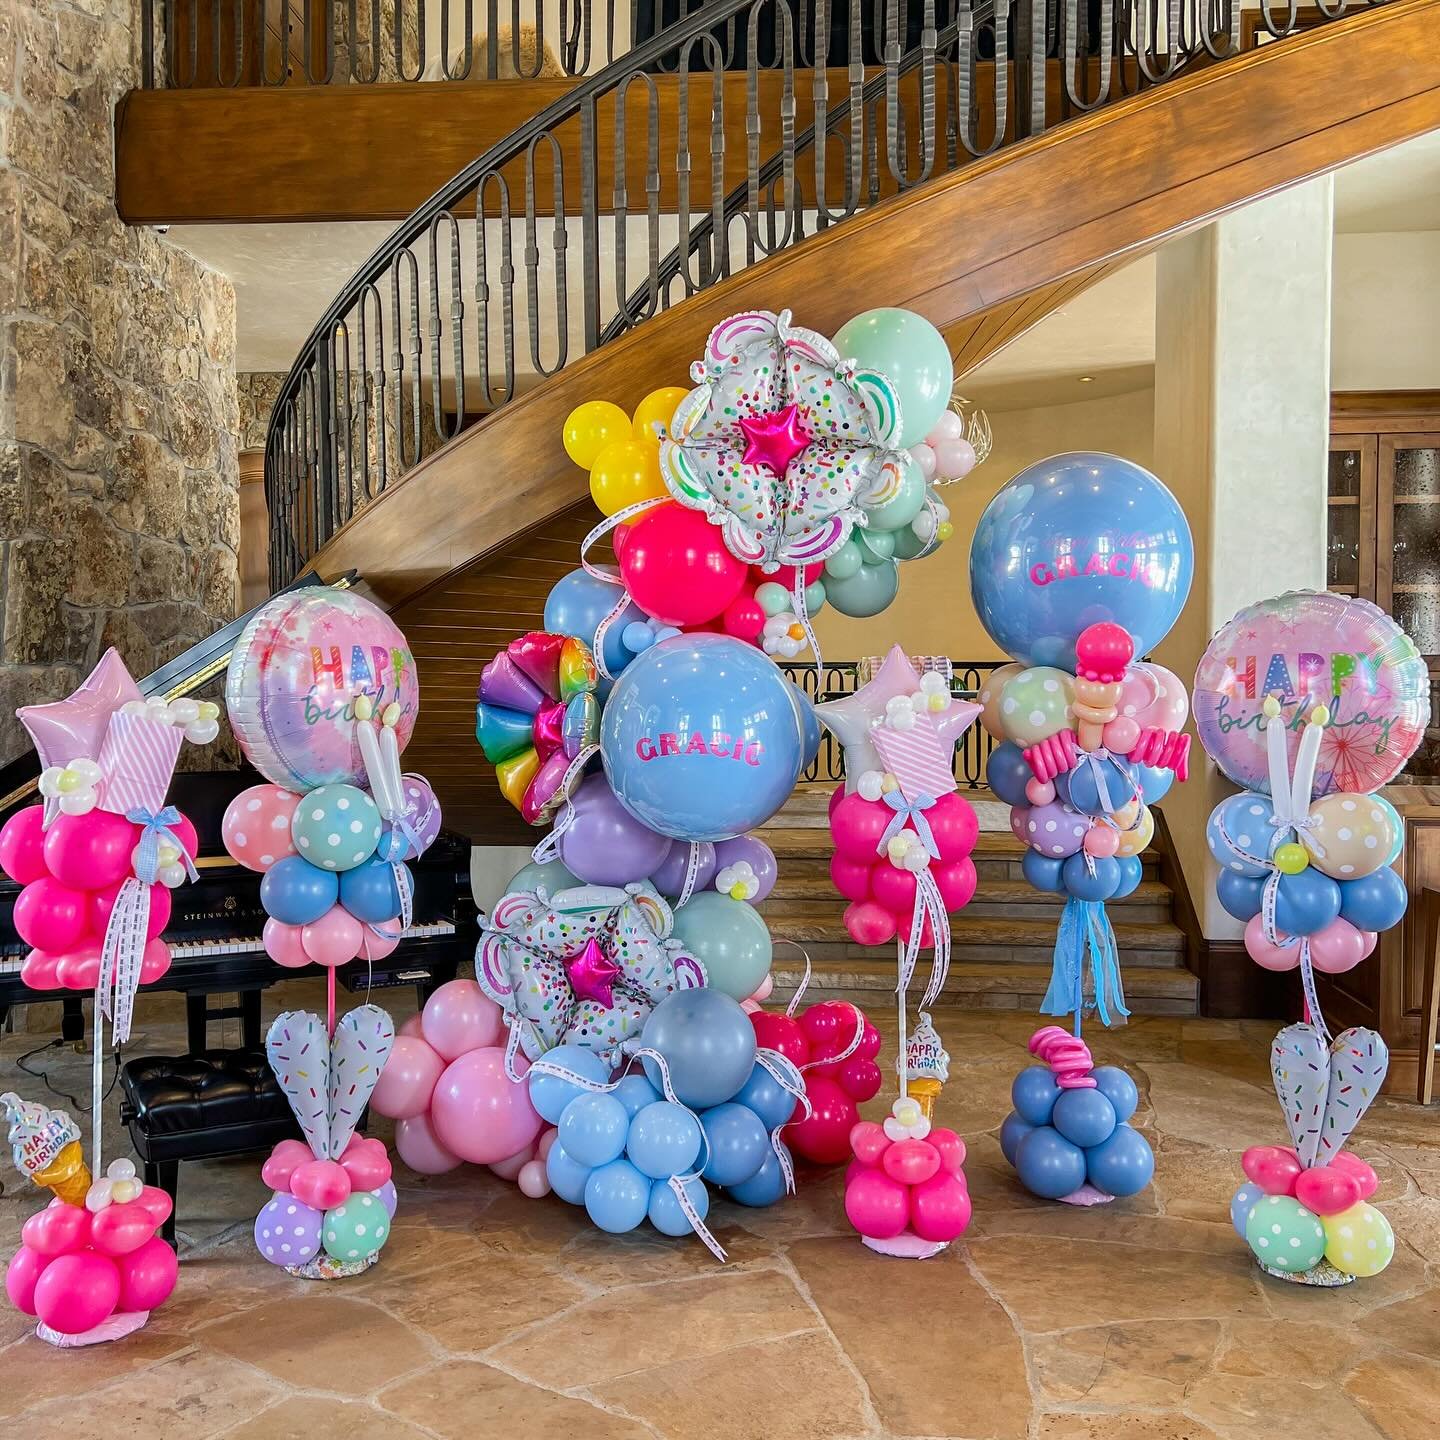 🎡🎠🎢🍿🍦Life&rsquo;s a carnival, enjoy the ride! 
.

.
.
. #balloontower #balloon #birthdayballoons #birthday🎂 #balloons #organic balloons #balloonprofessional #balloonmosaic ballooncolumn #balloonarrangement #balloonmarquee #obsessed #🎈 #vail #b